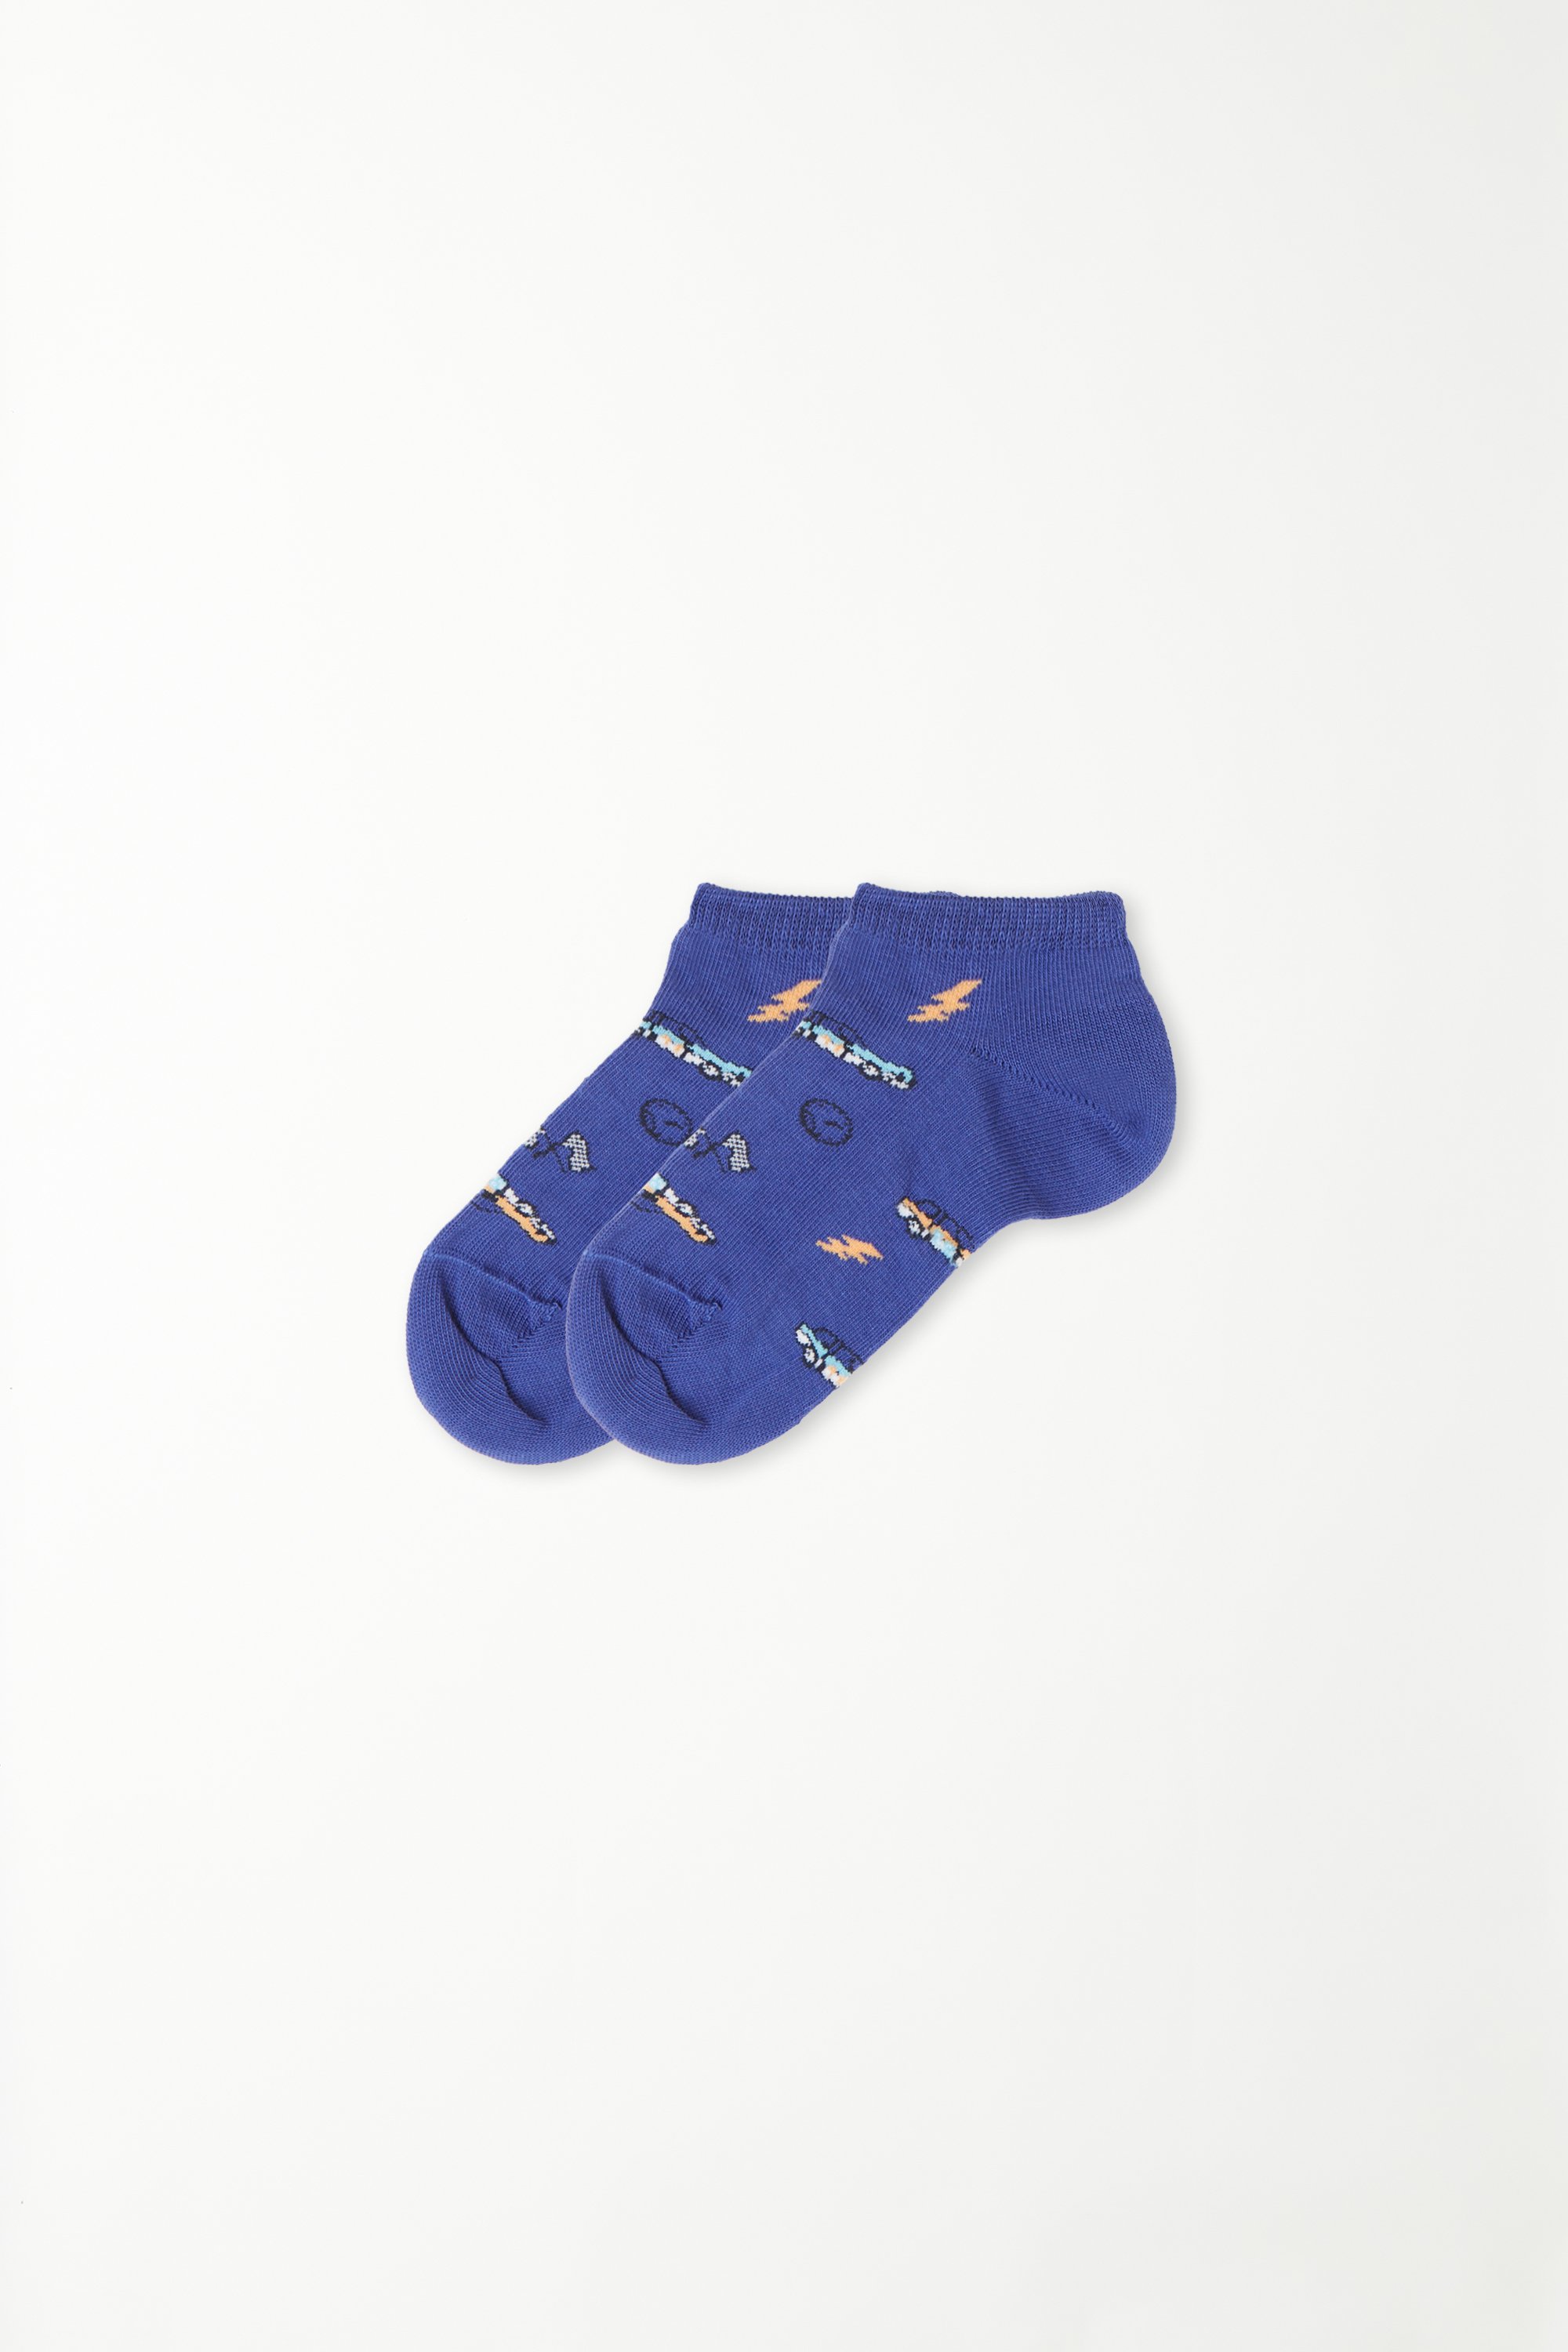 Boys’ Patterned Cotton Trainer Socks